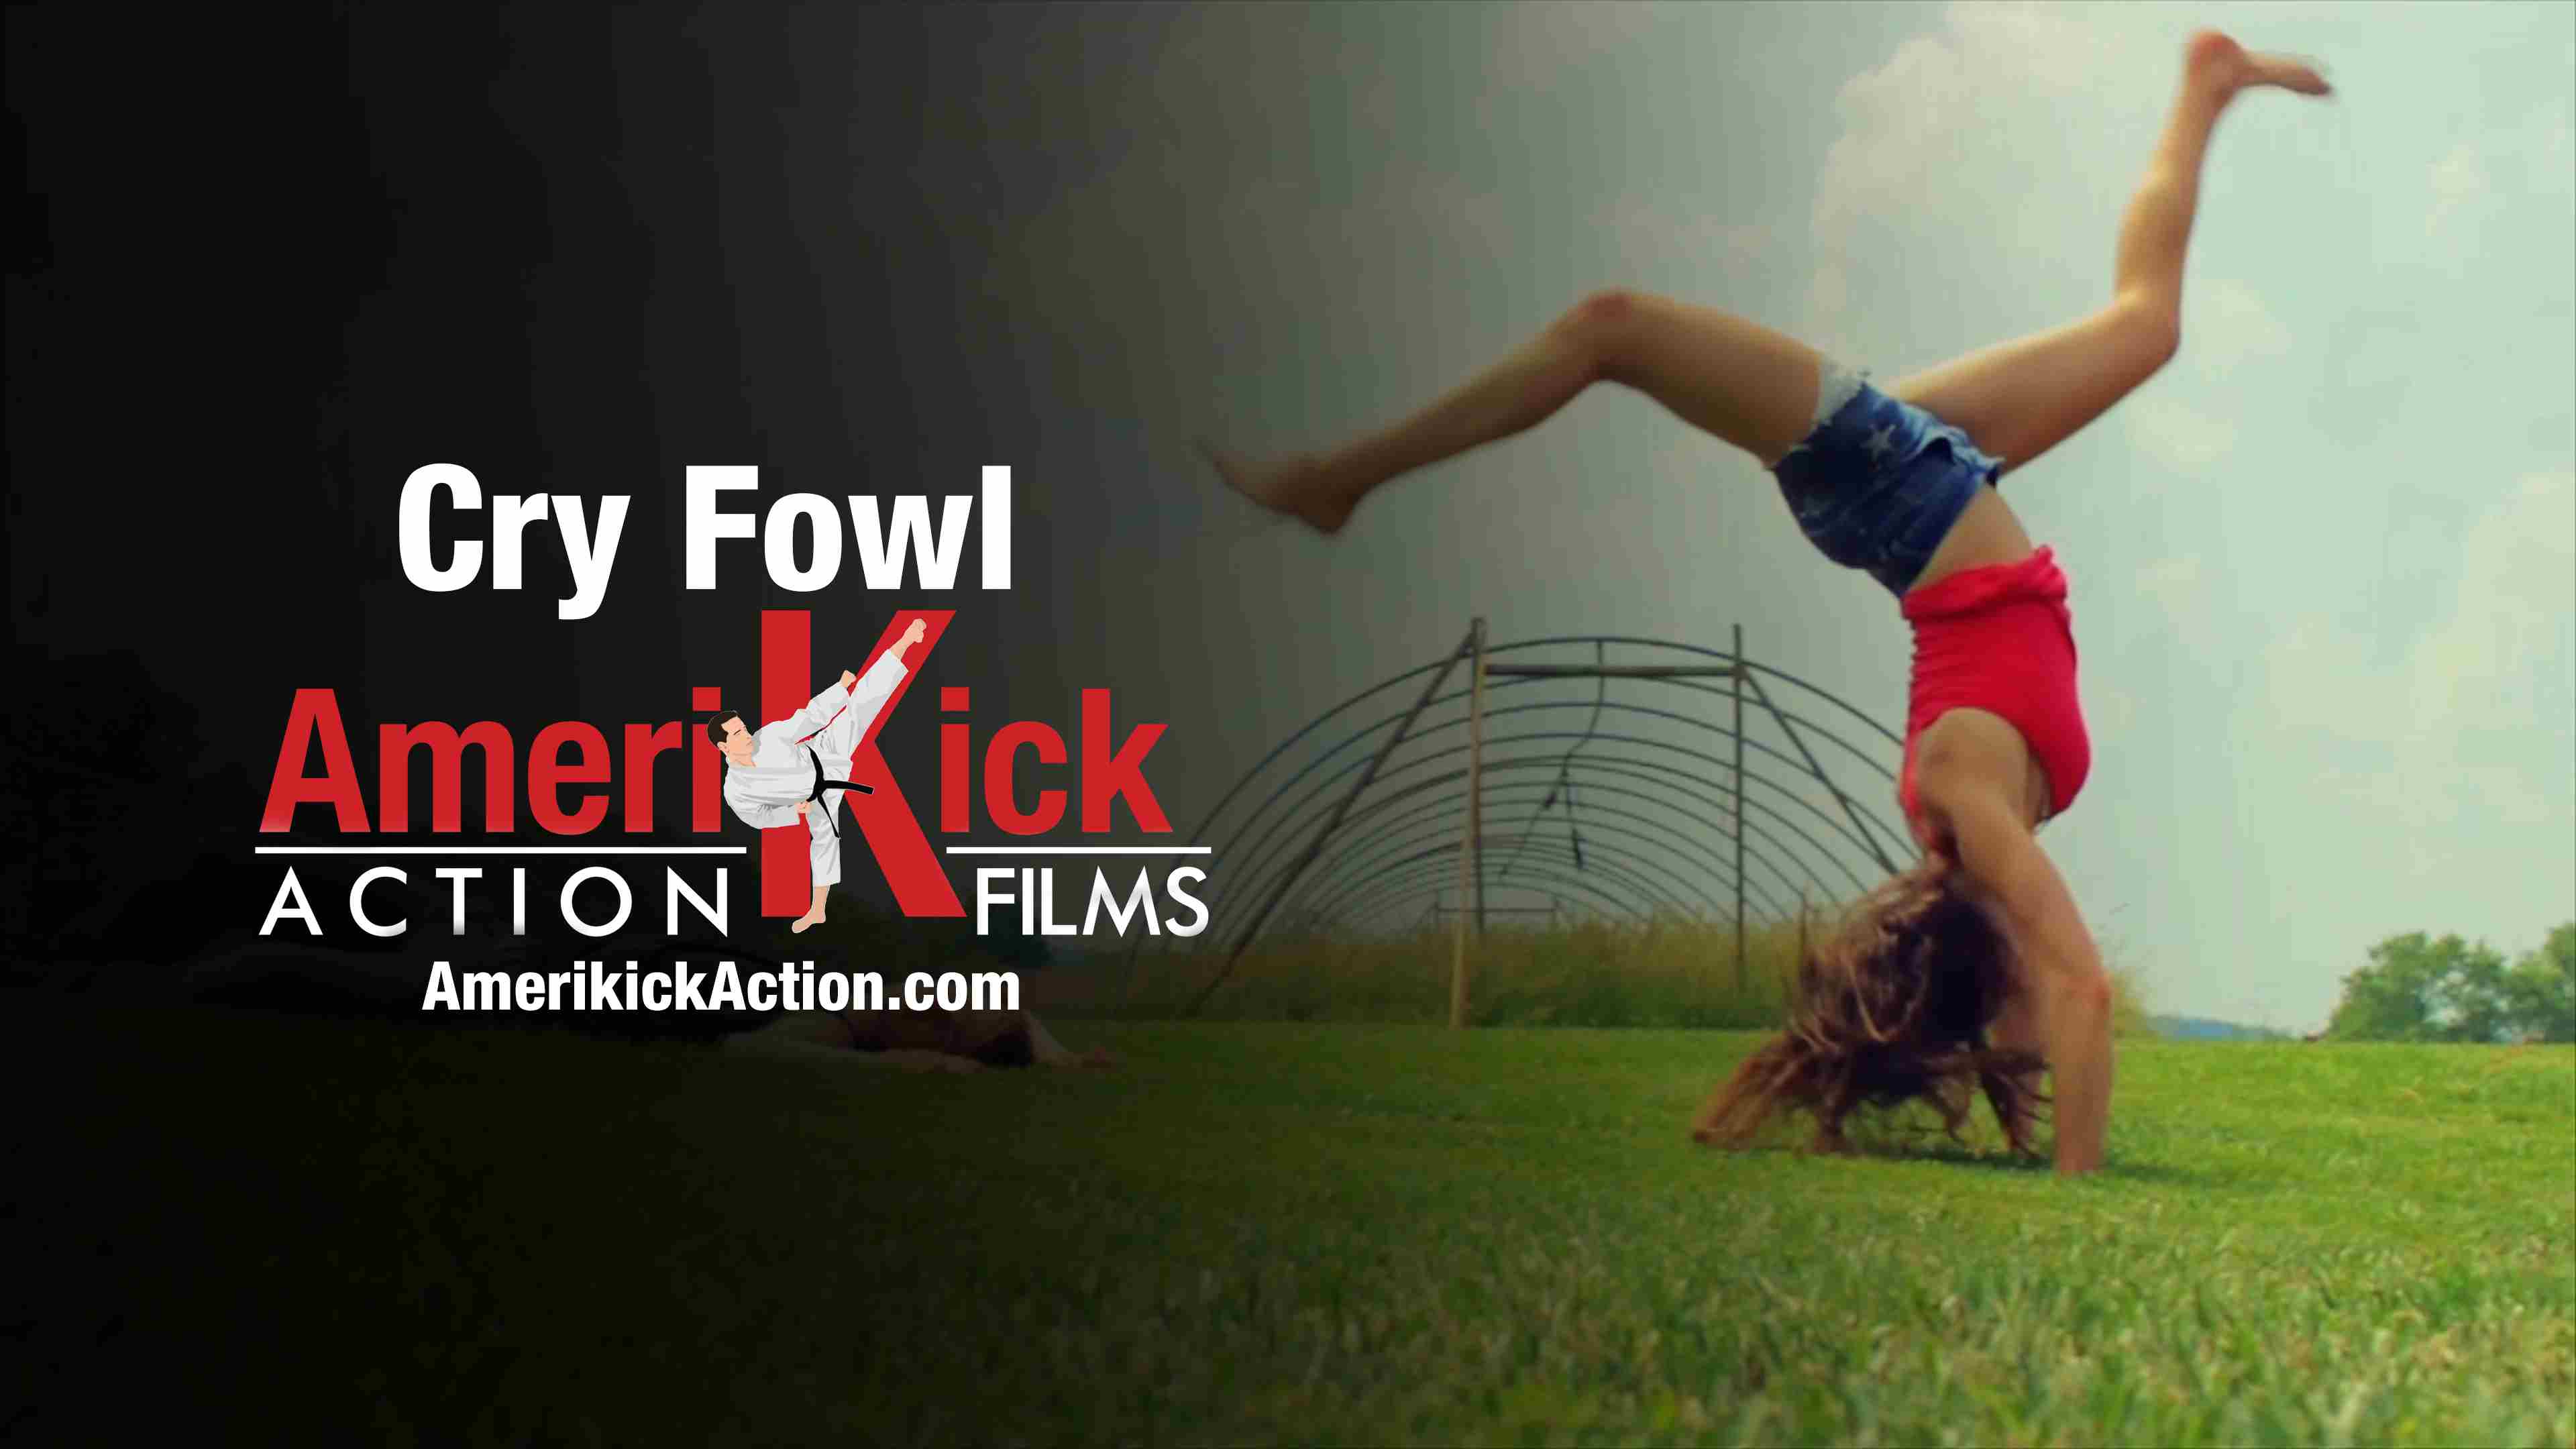 Amerikick Action | Cry Fowl